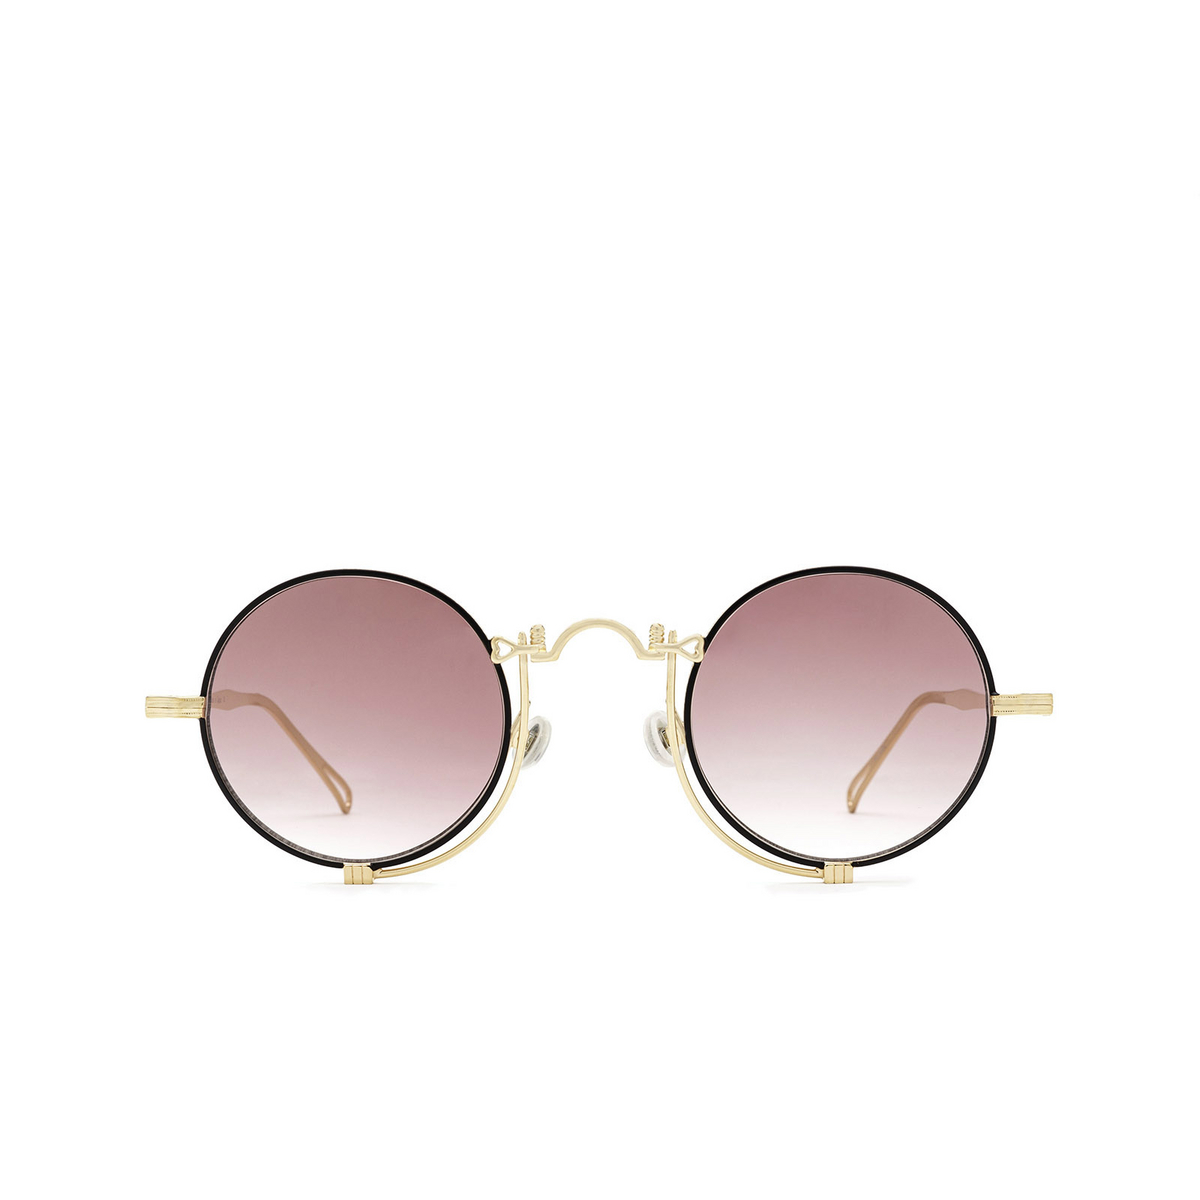 Matsuda® Round Sunglasses: 10601H color Rose Gold - Matte Black Rg-mbk - front view.